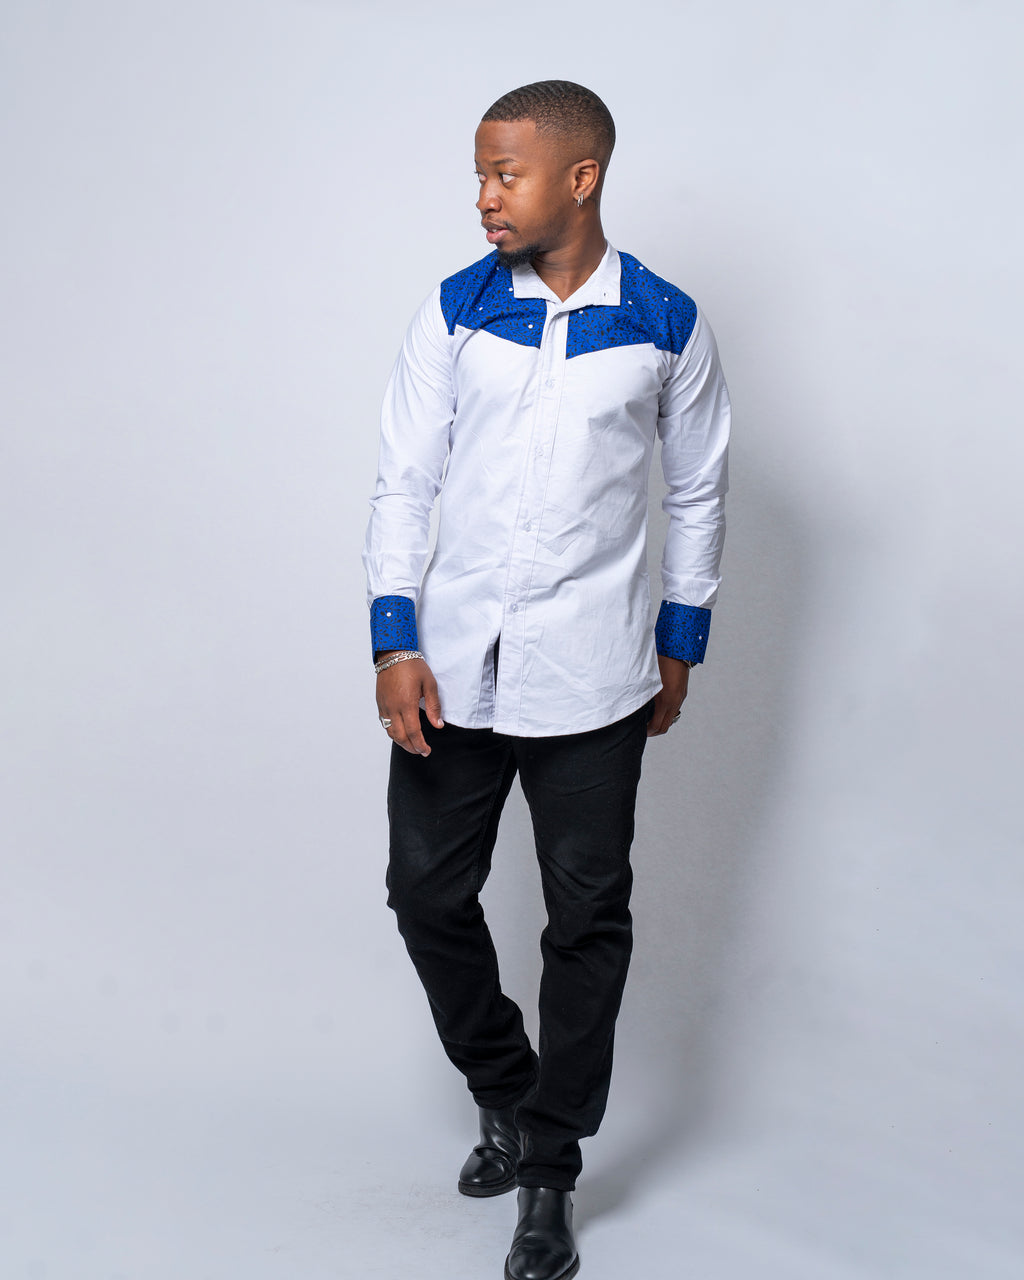 Chris Mixed Print Men Shirt | White and Blue African Print